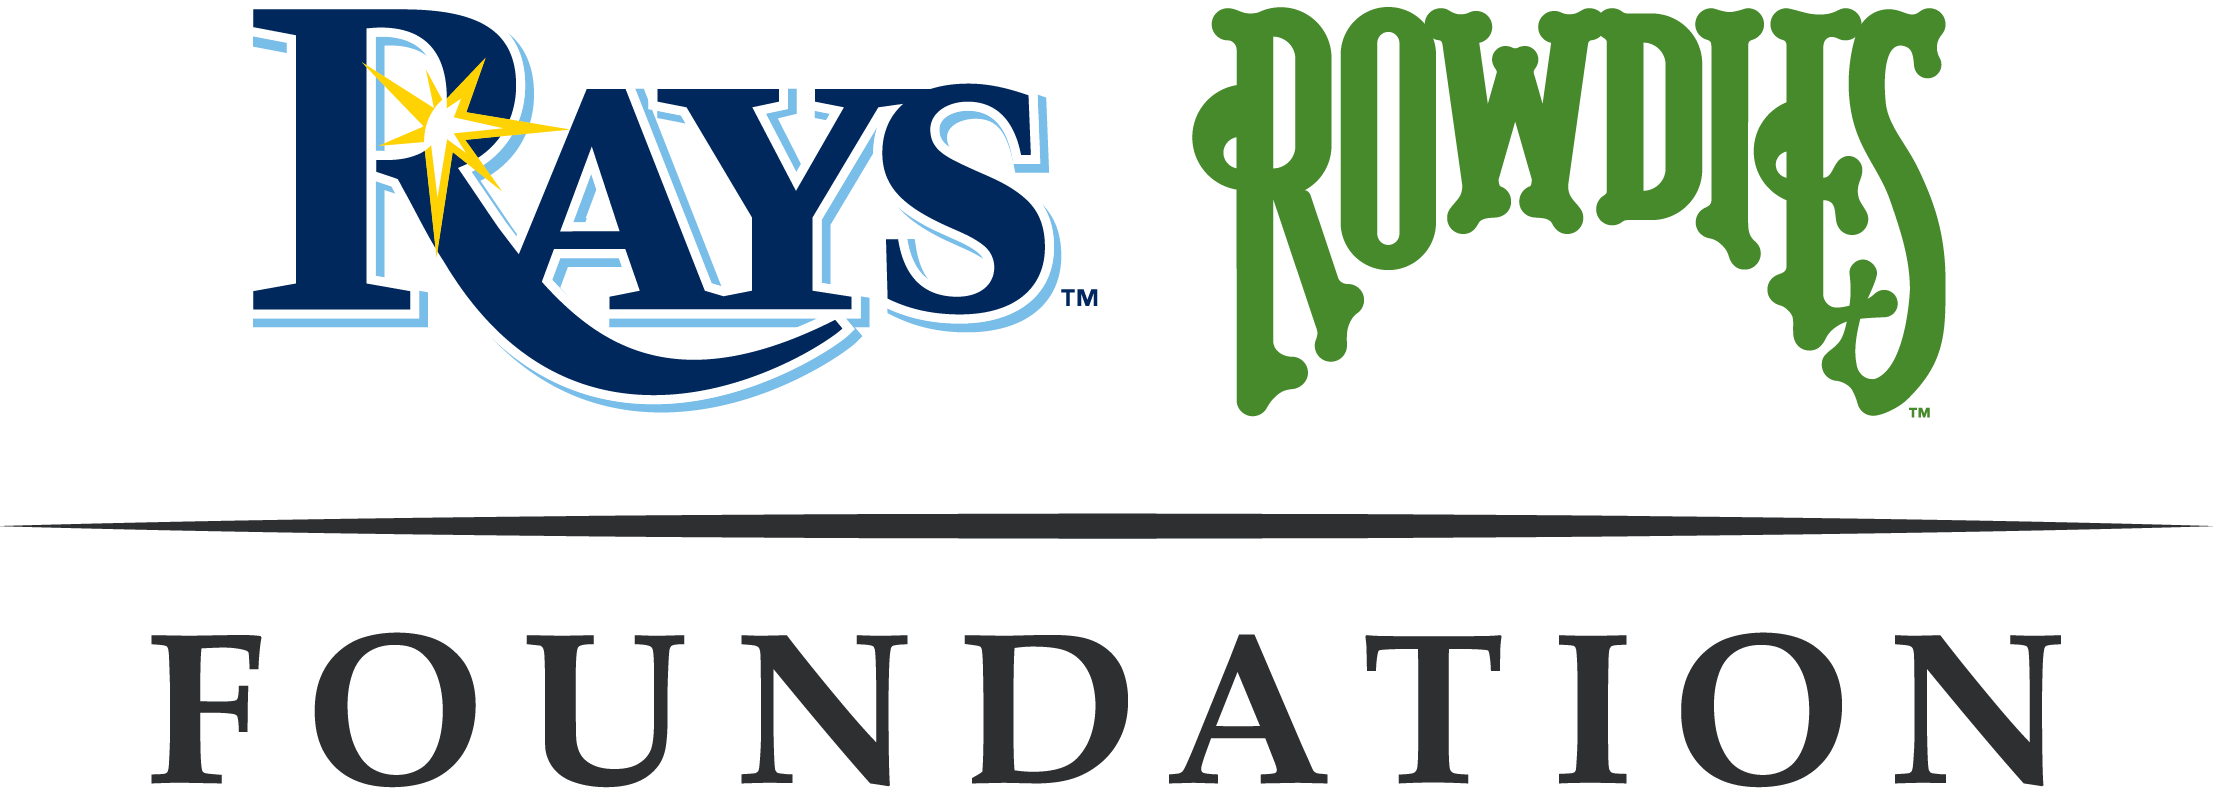 Tampa Bay Rays Foundation